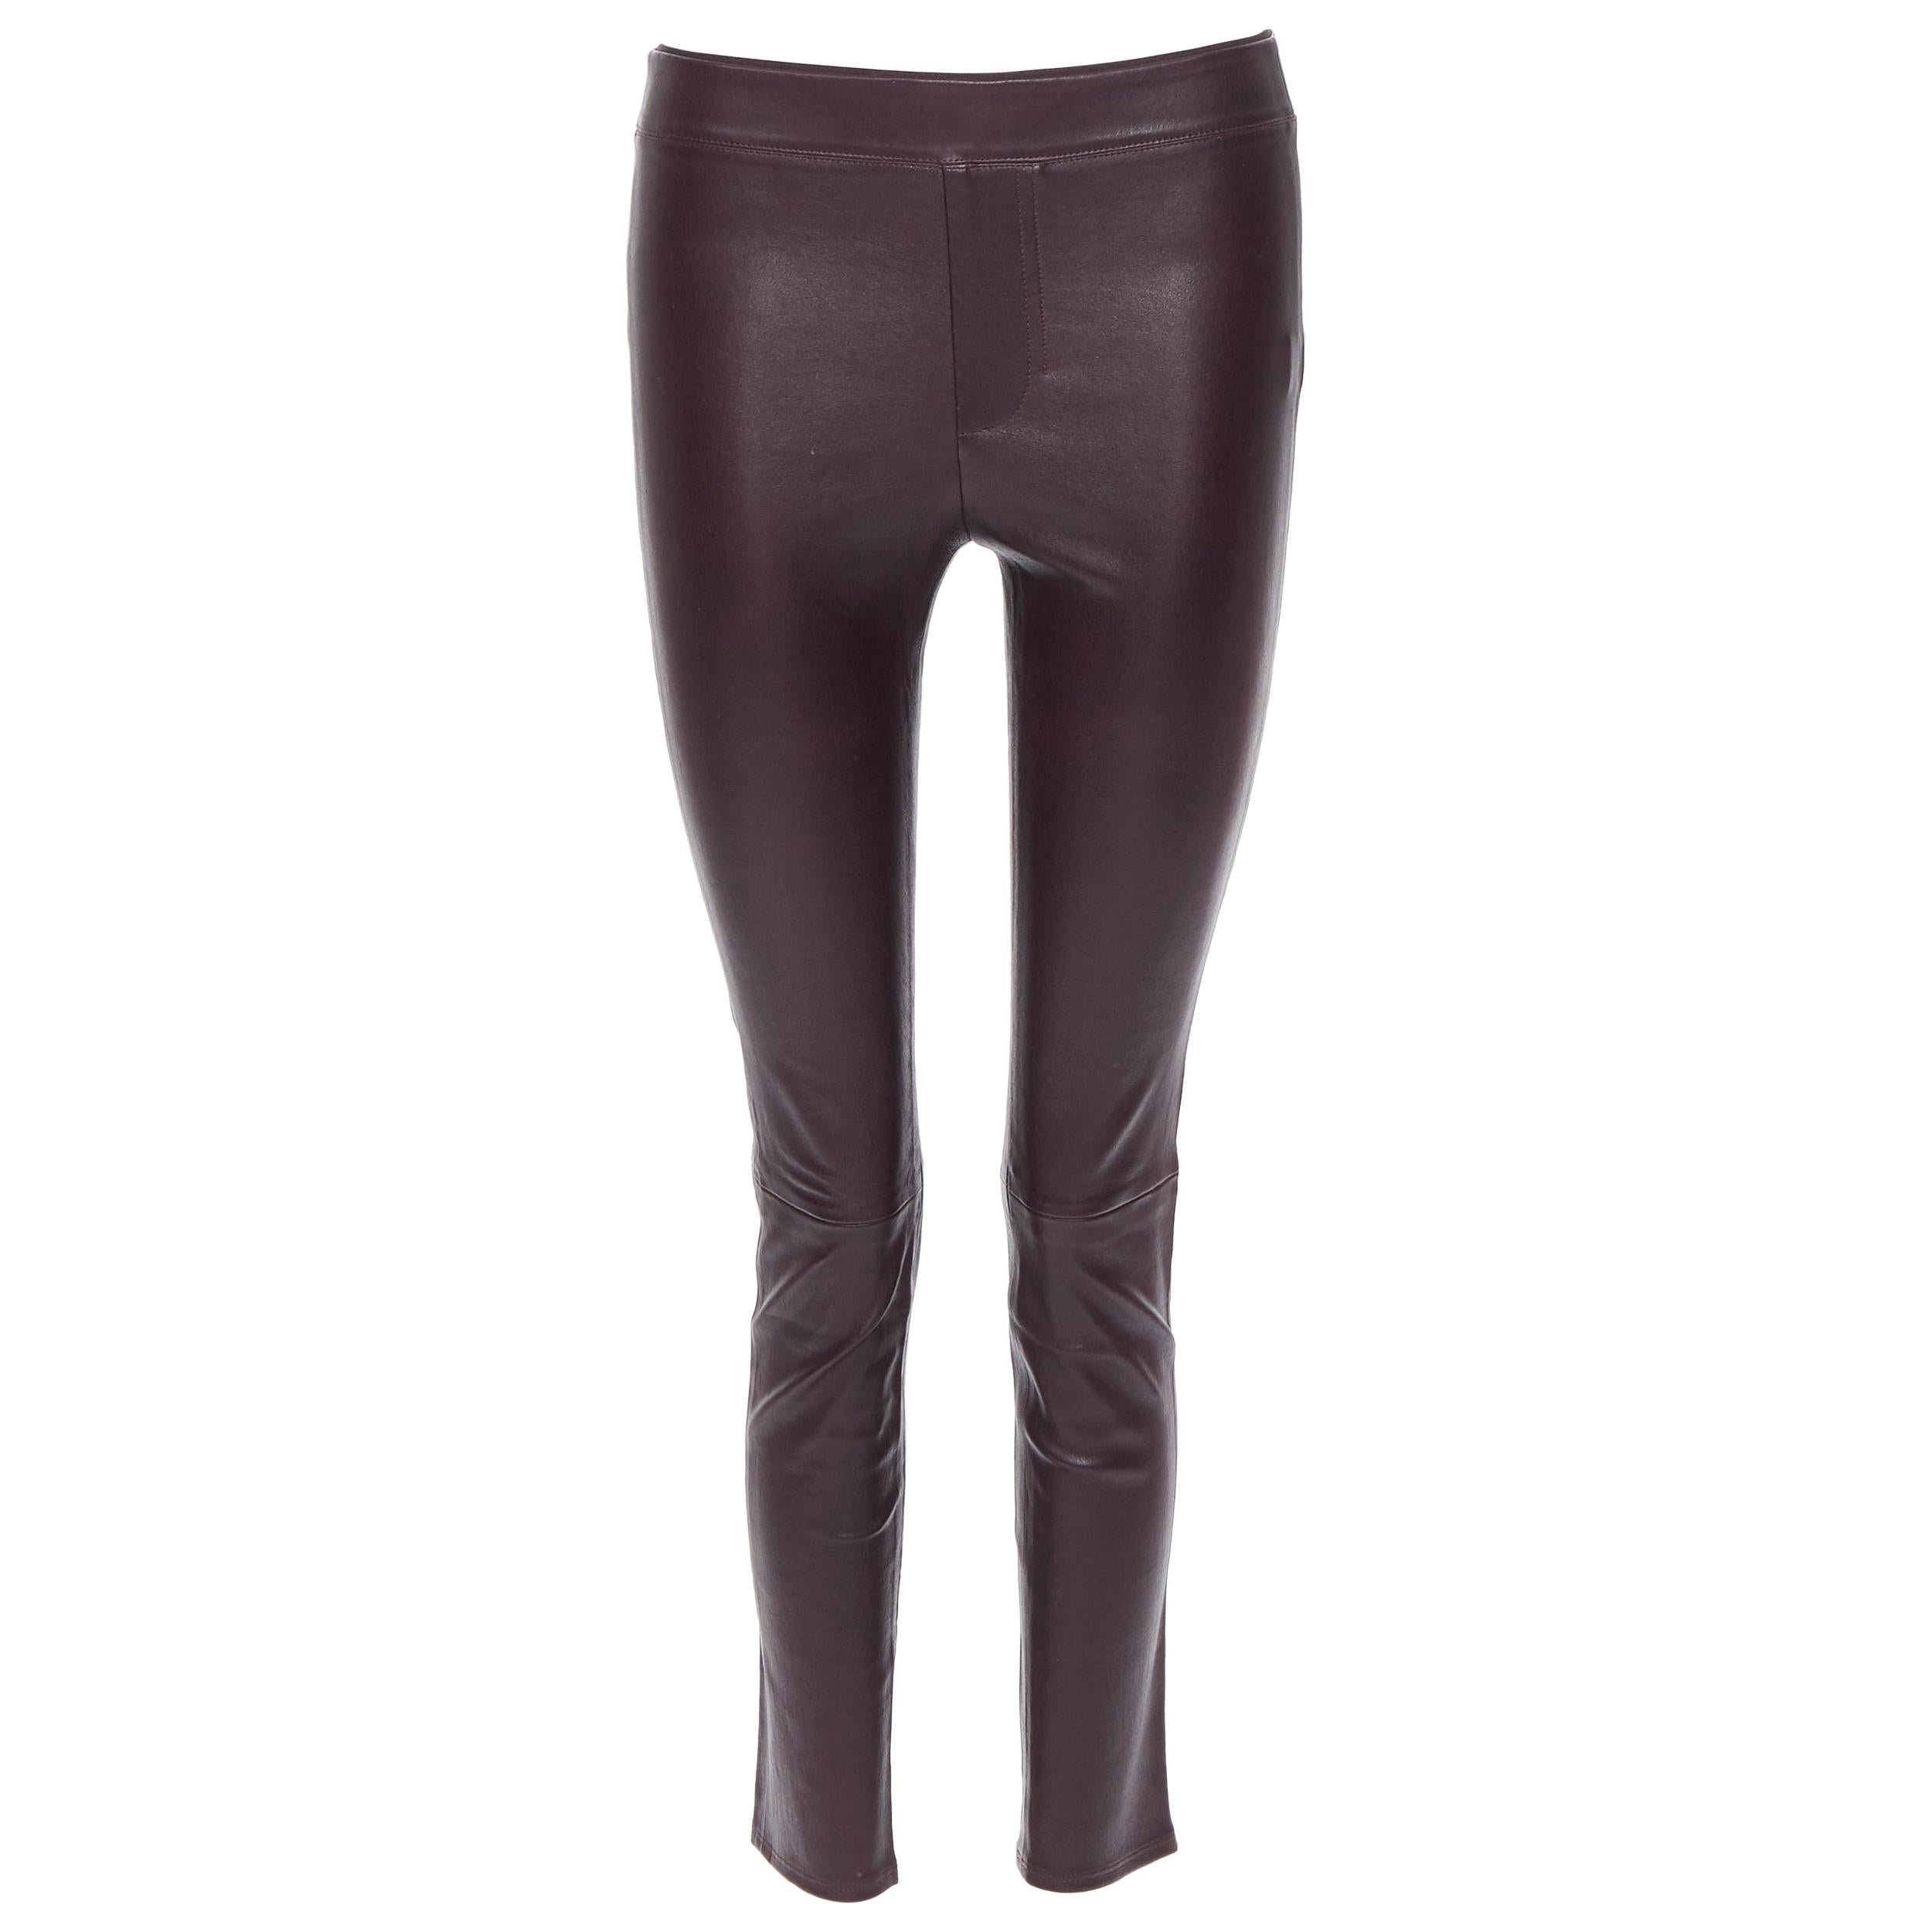 HELMUT LANG 100% leather dark burgundy minimal stretchy skinny leg pants XS